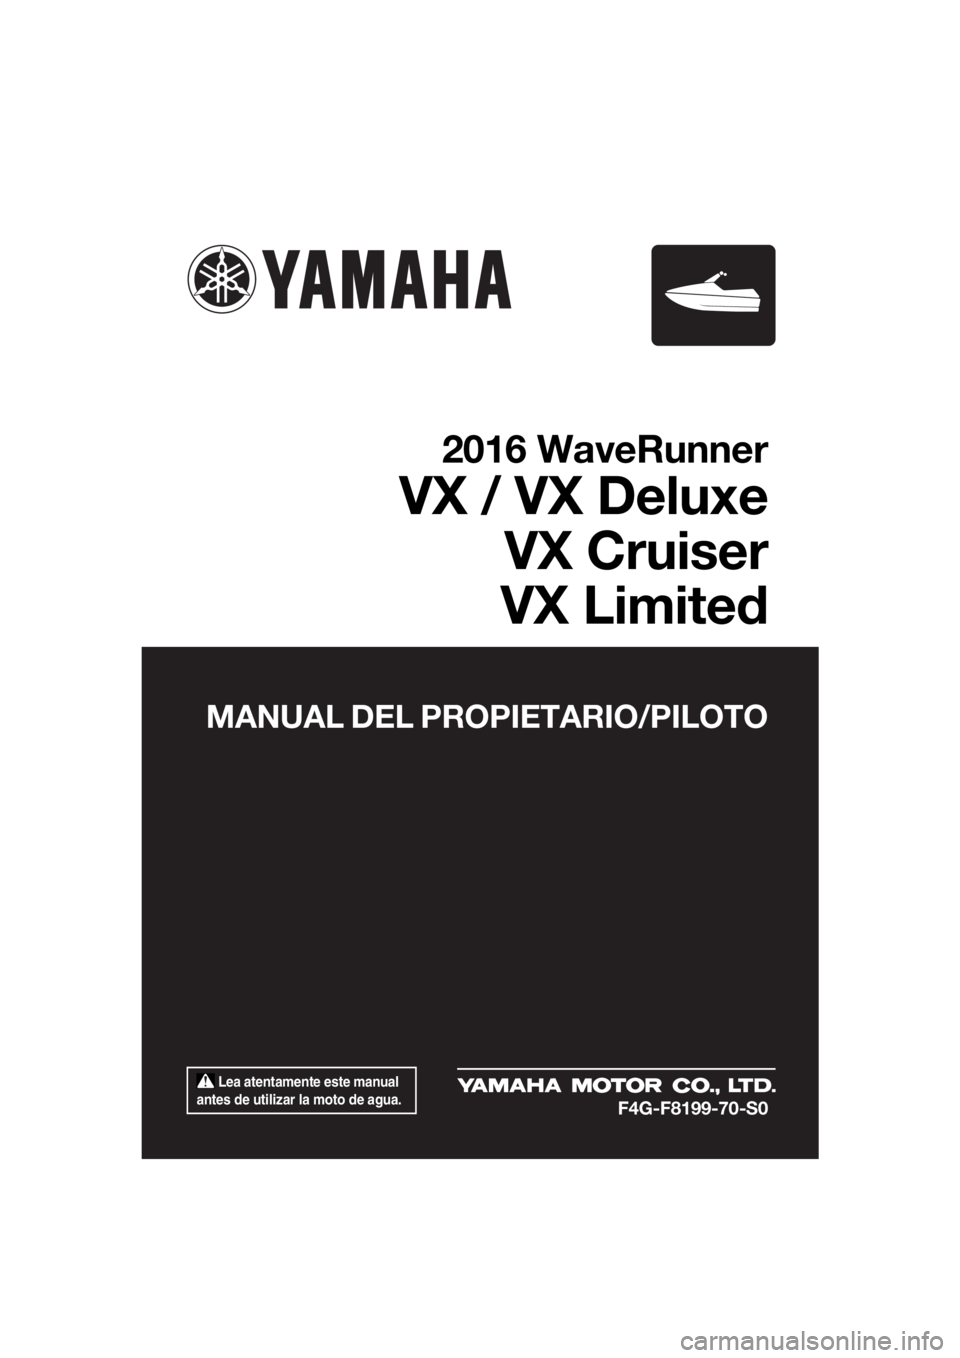 YAMAHA VX LIMITED 2016  Manuale de Empleo (in Spanish)  Lea atentamente este manual 
antes de utilizar la moto de agua.
MANUAL DEL PROPIETARIO/PILOTO
2016 WaveRunner
VX / VX Deluxe
VX Cruiser
VX Limited
F4G-F8199-70-S0
UF4G70S0.book  Page 1  Monday, Septe